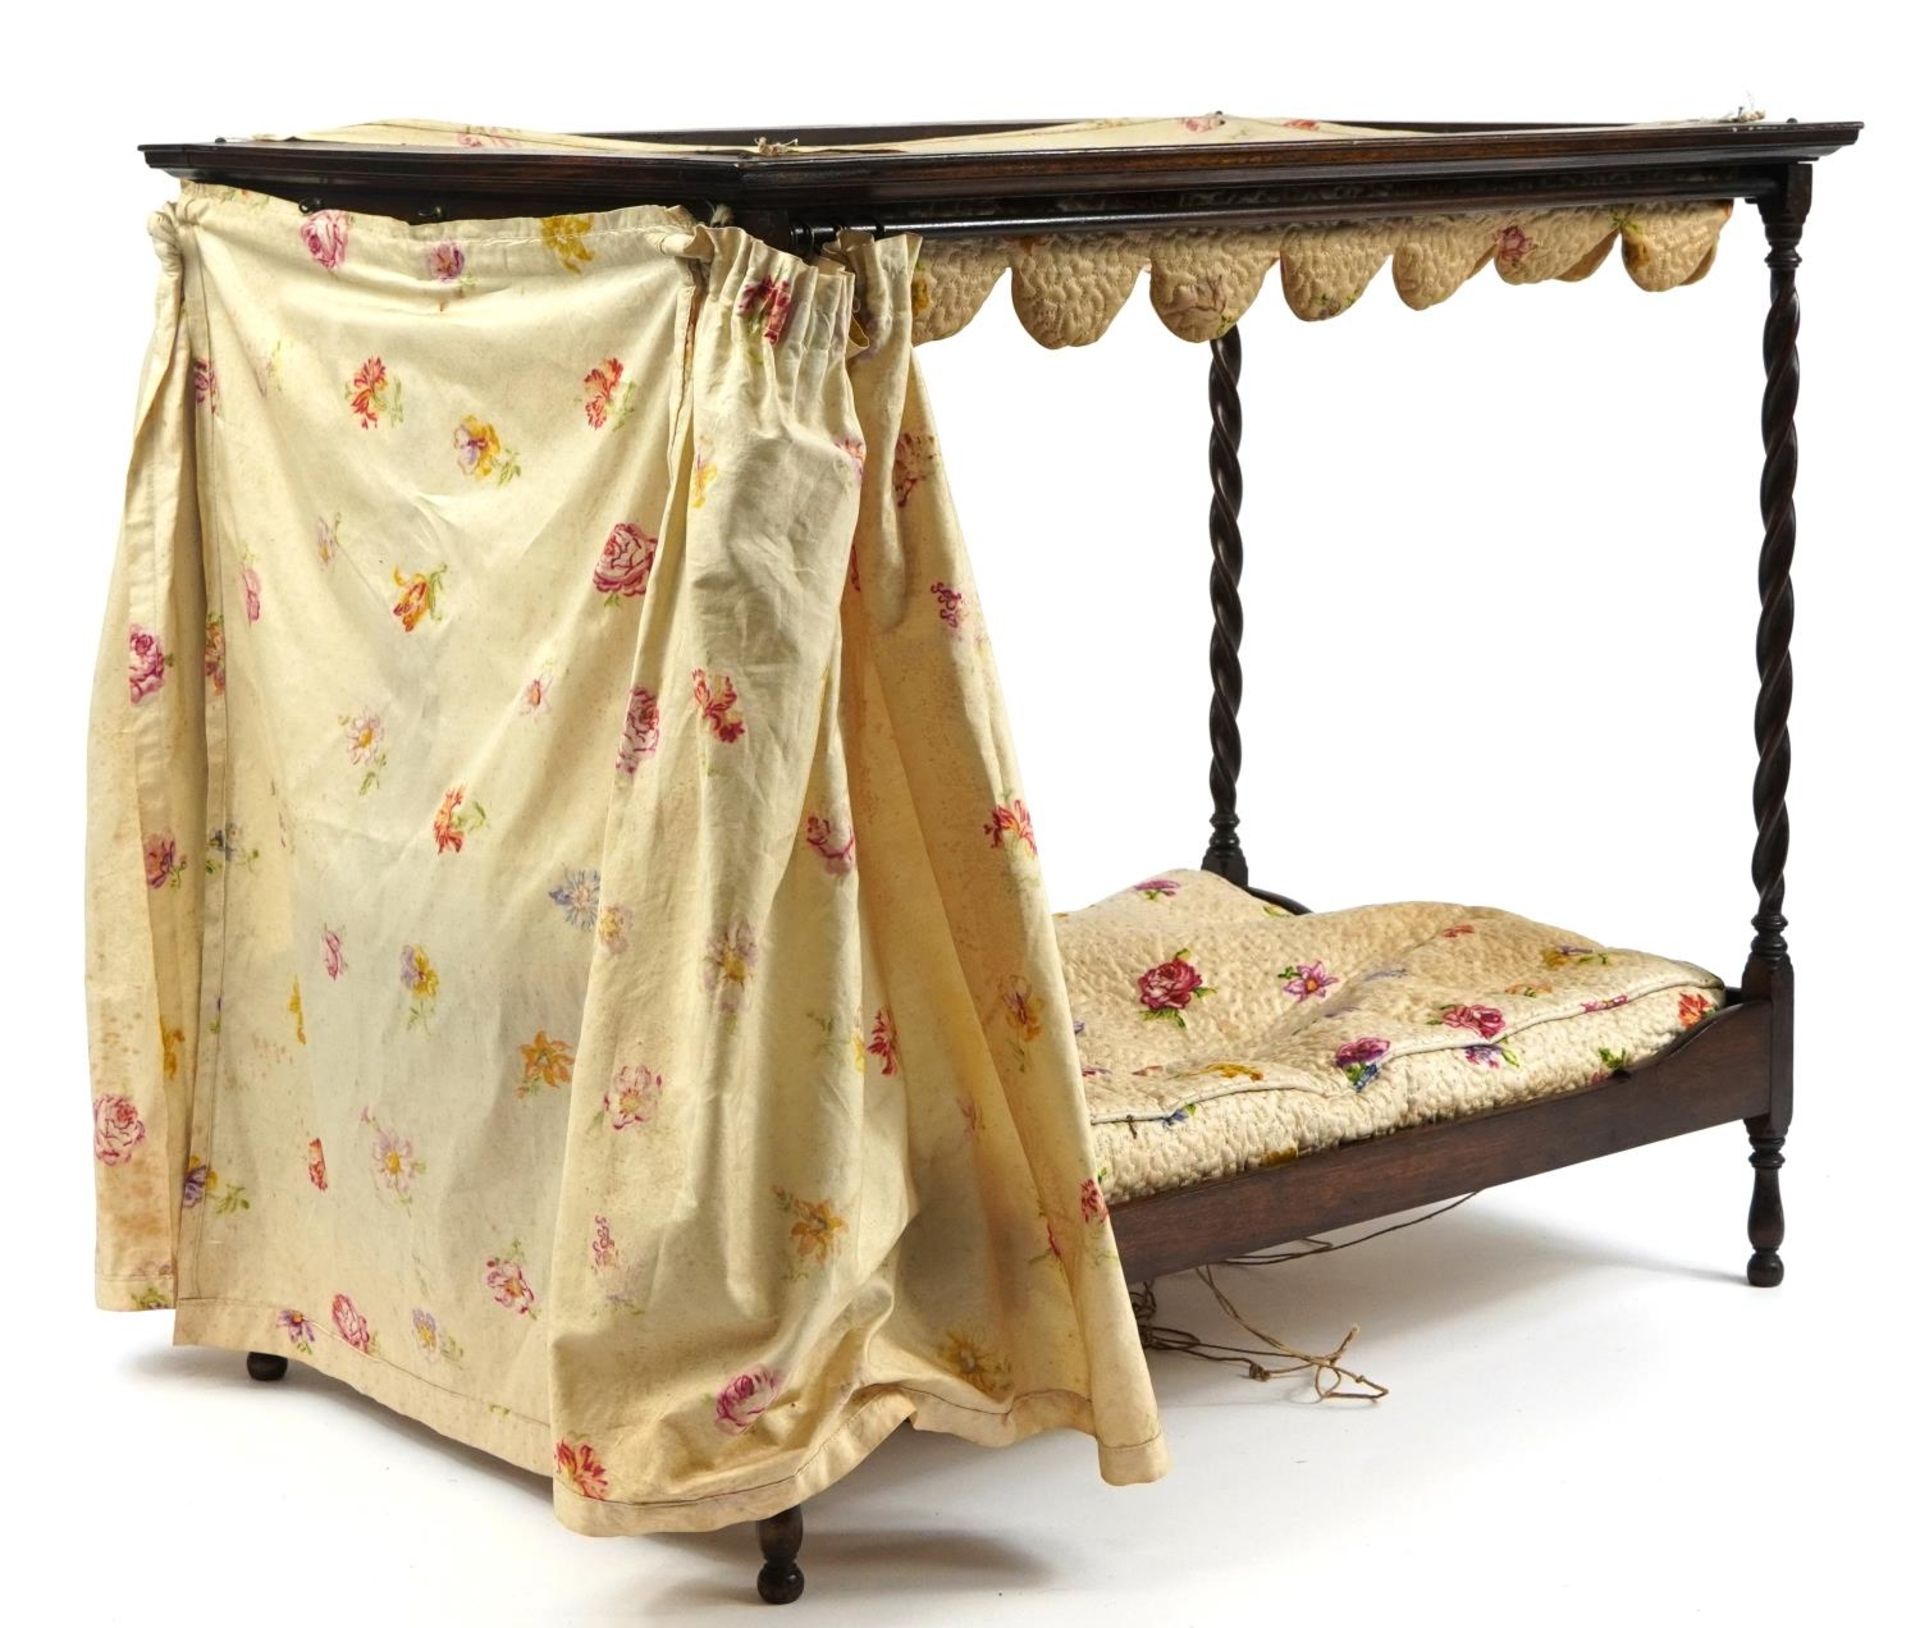 Antique mahogany barley twist four poster apprentice doll's bed, 59cm H x 70cm W x 44cm D - Image 2 of 3